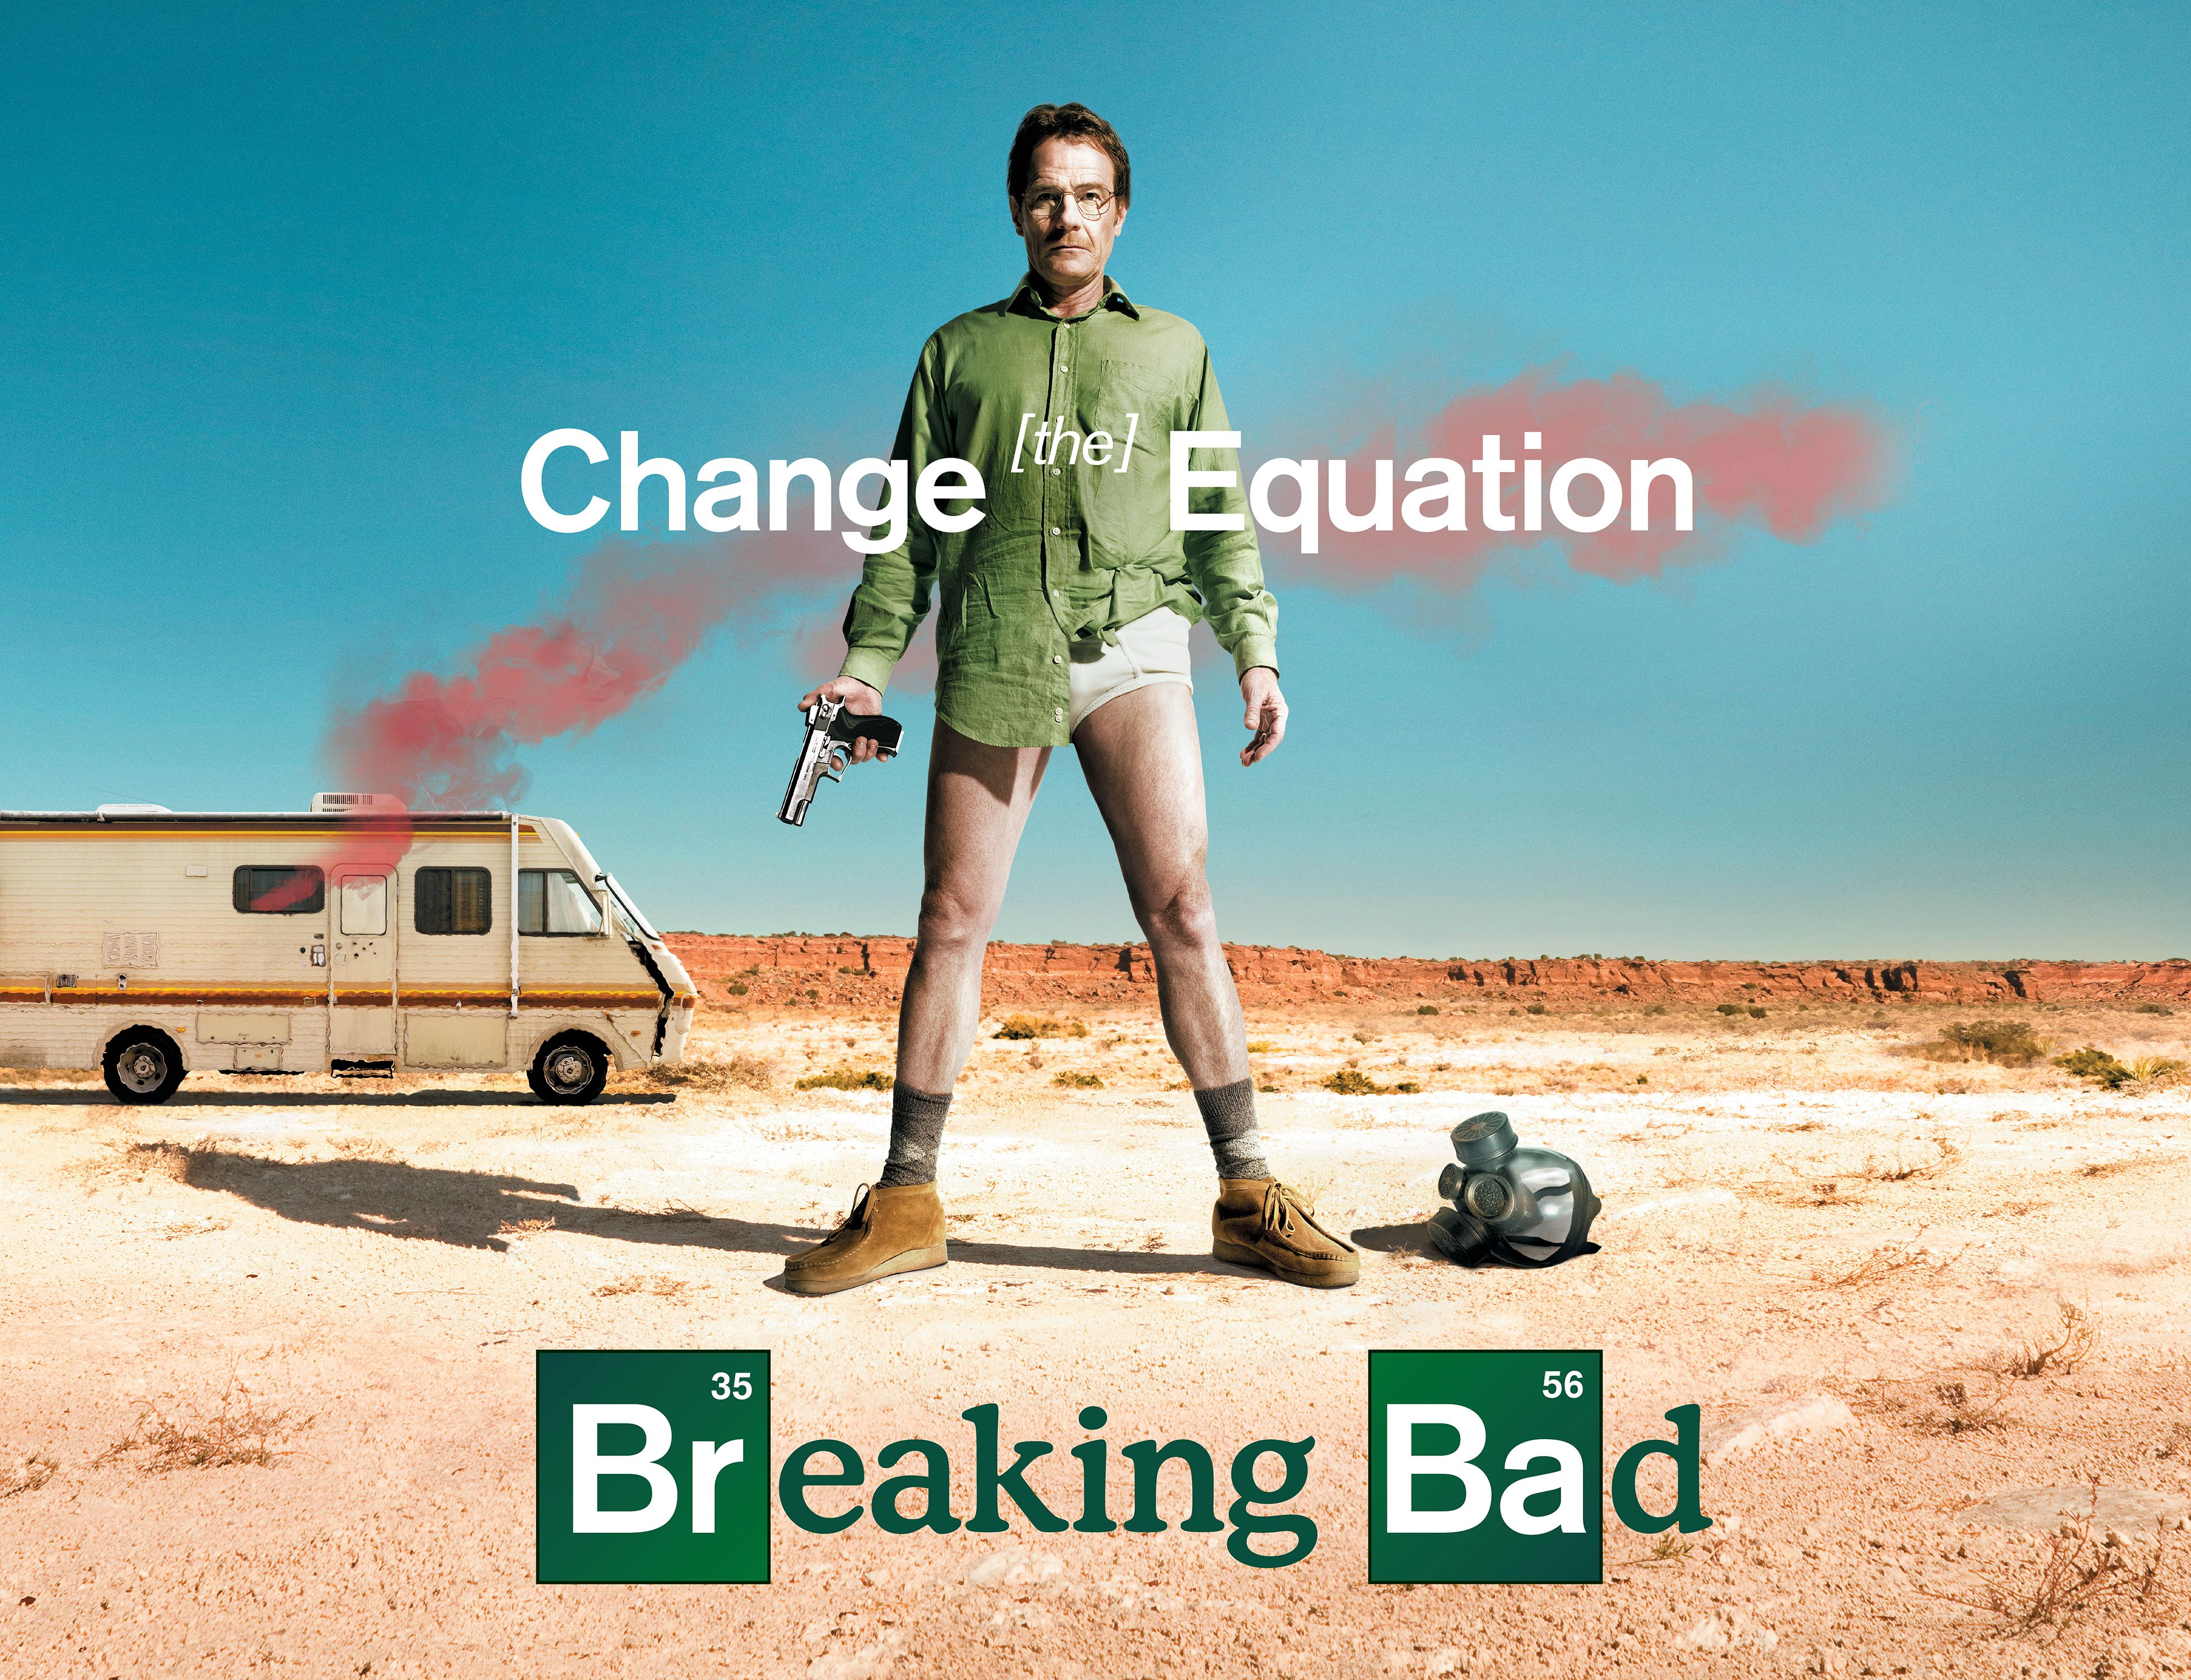 breaking bad season 1 poster